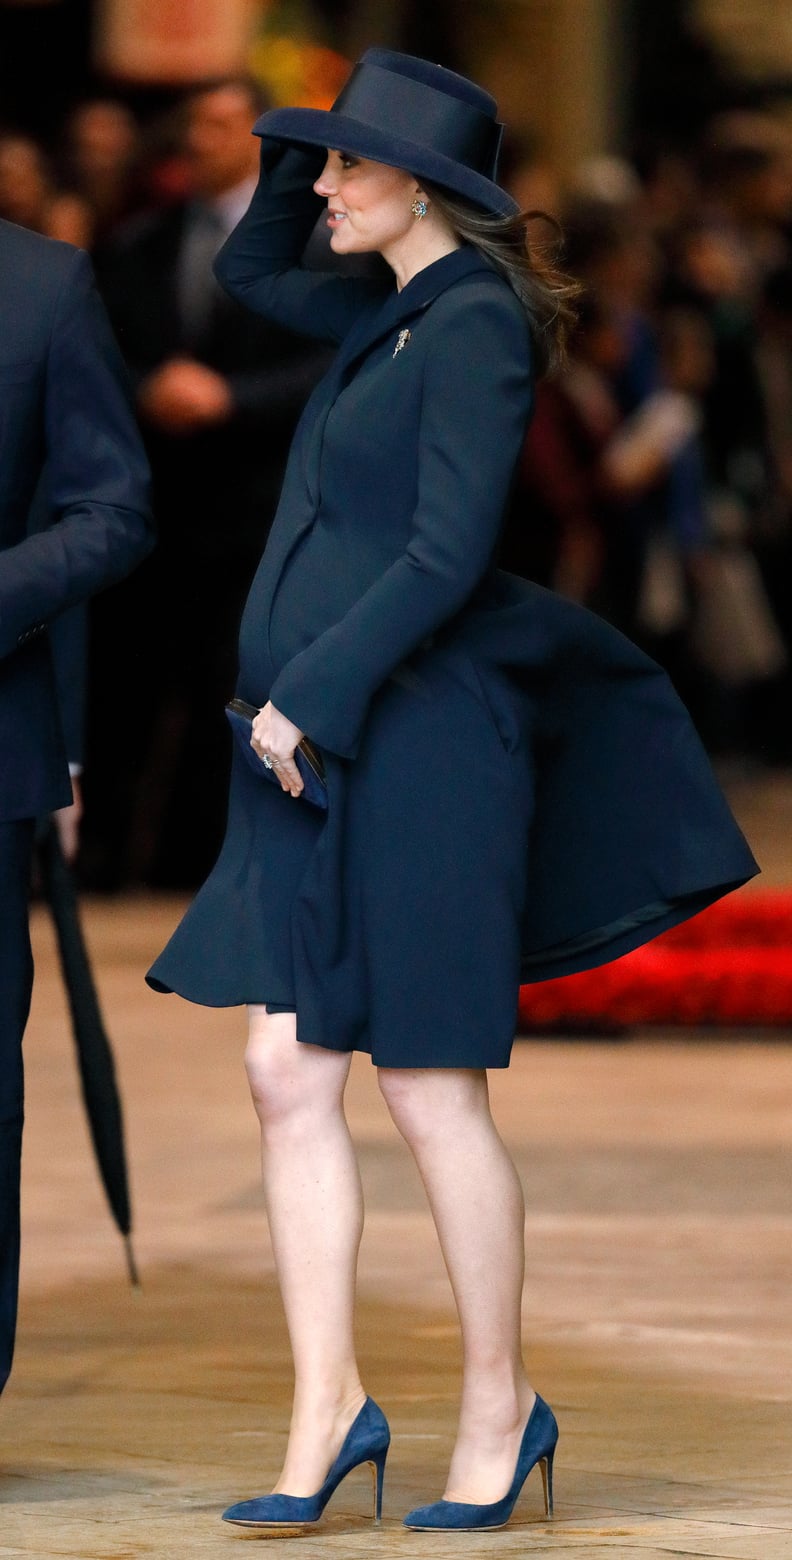 Alexander McQueen Navy Suede Pumps - Kate Middleton Shoes - Kate's Closet